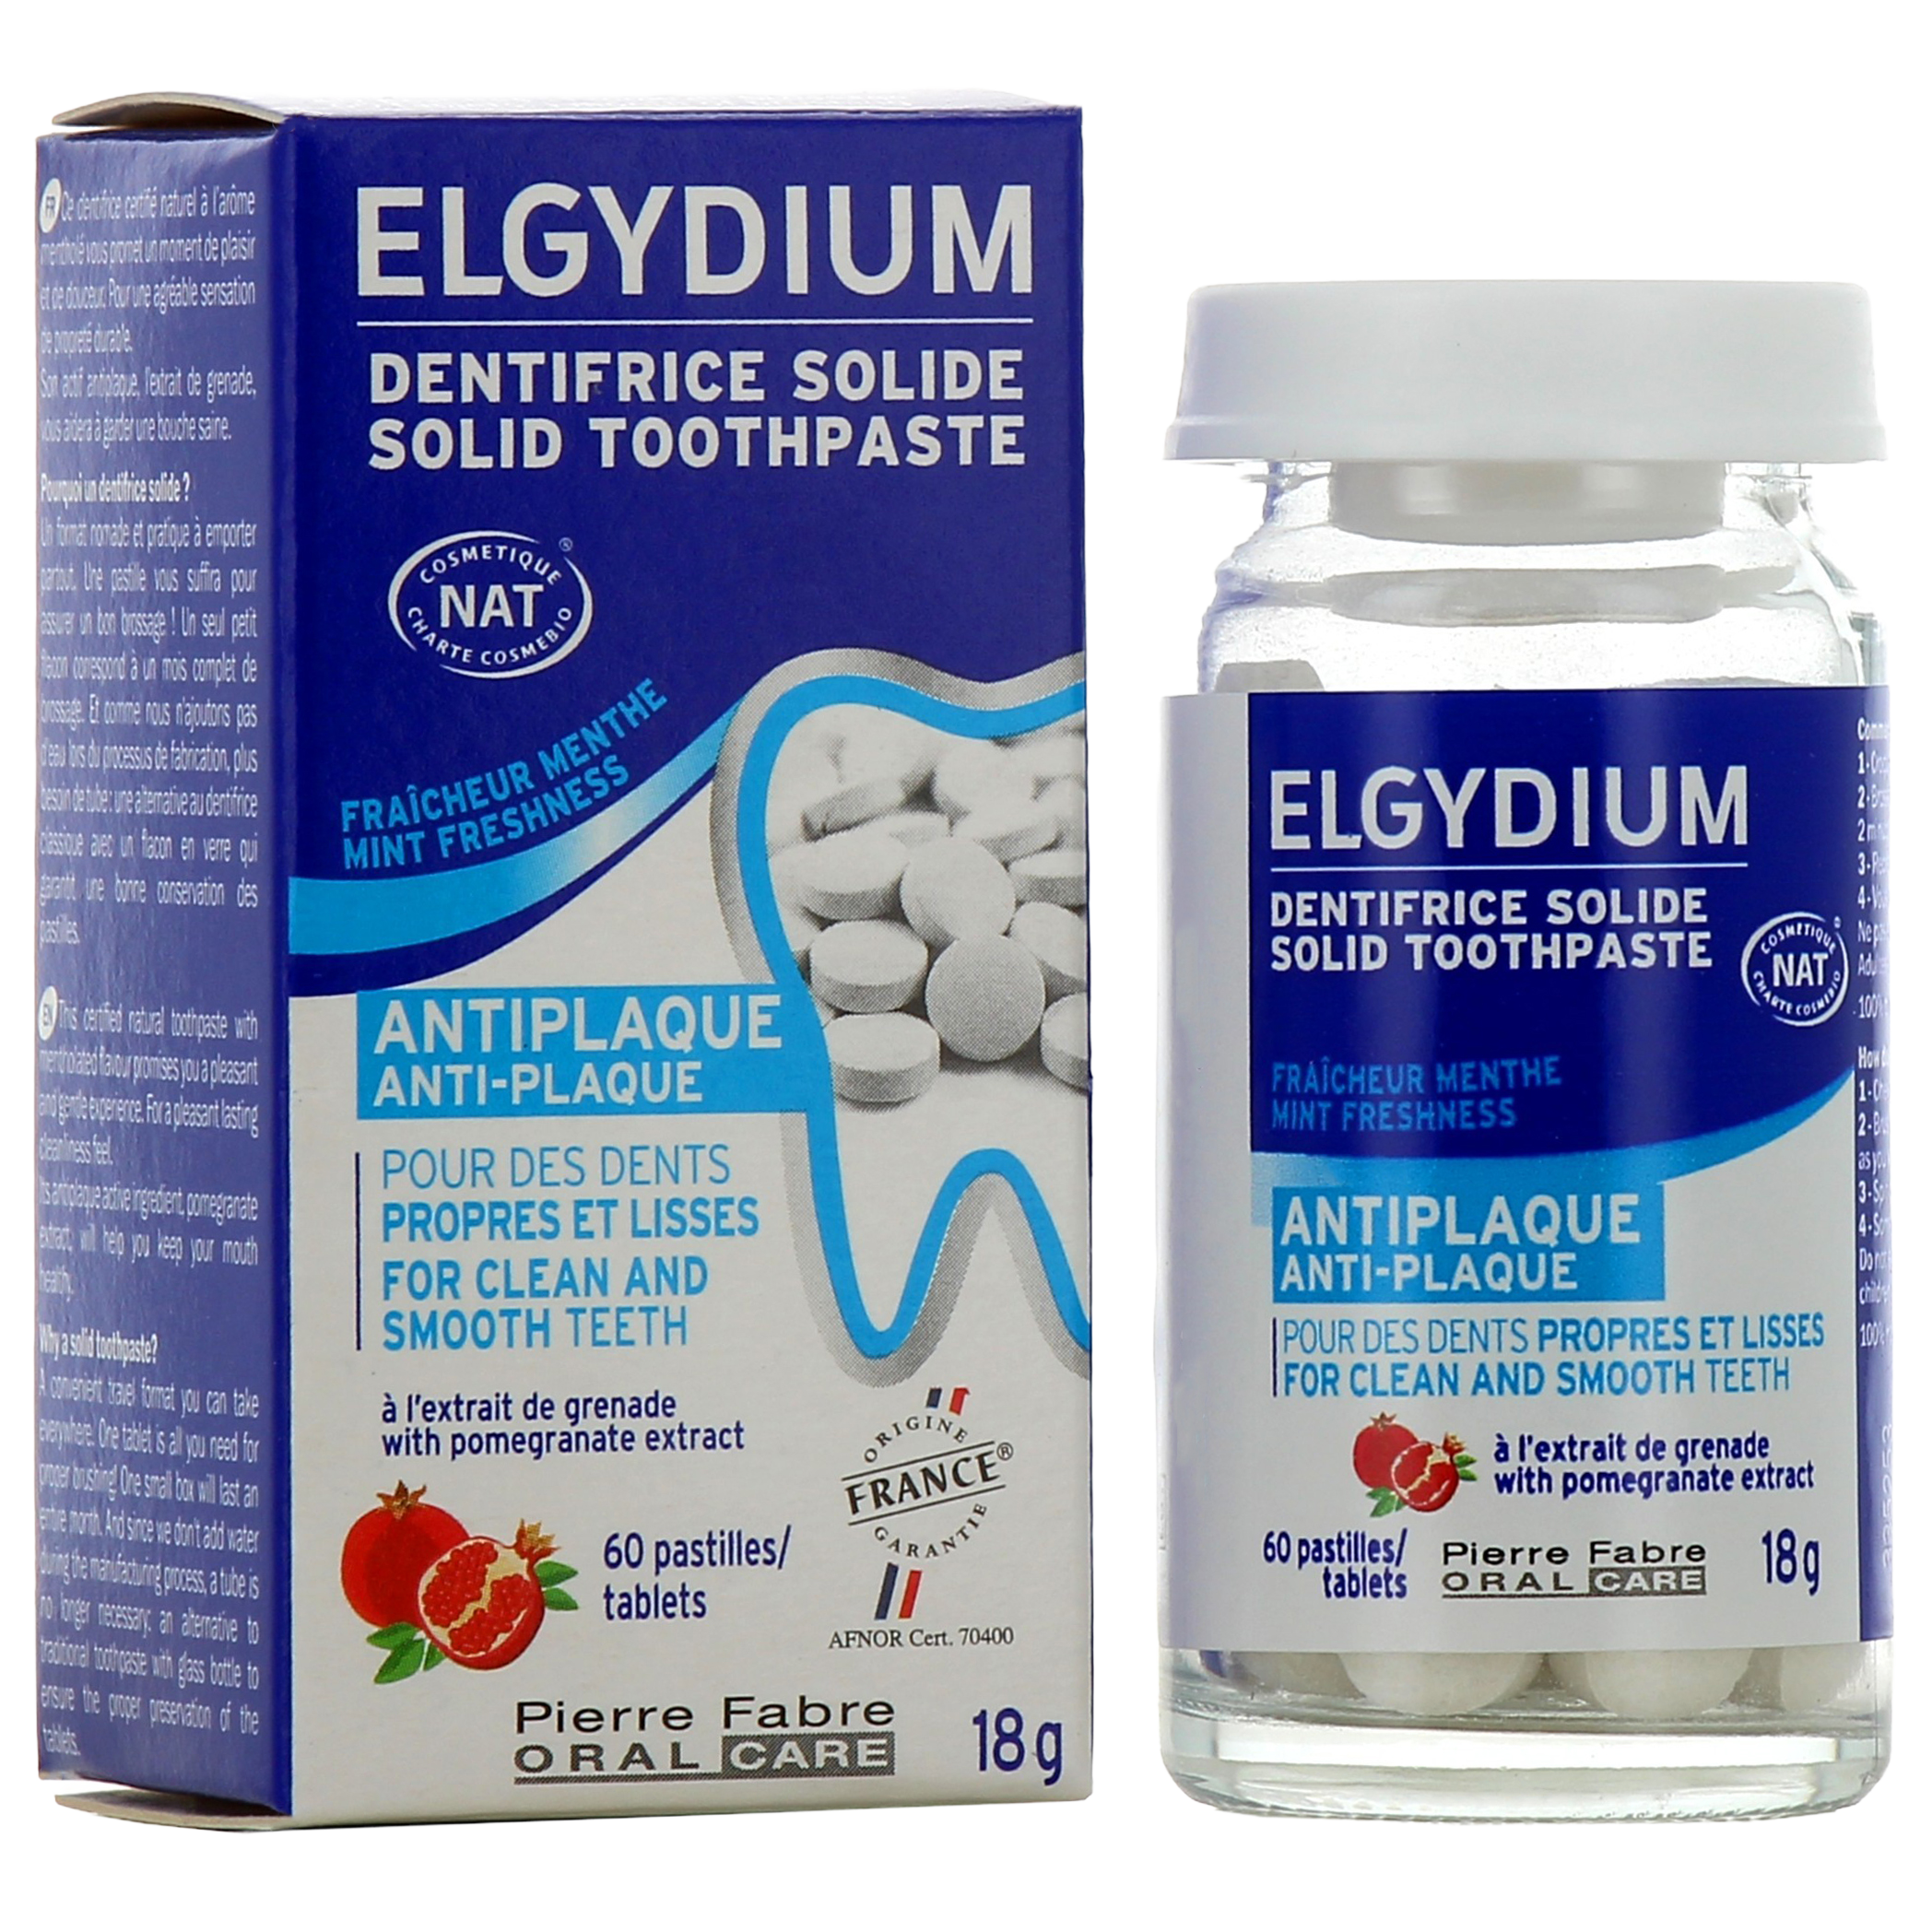 Elgydium dentifrice solide à croquer - Actif anti plaque dentaire